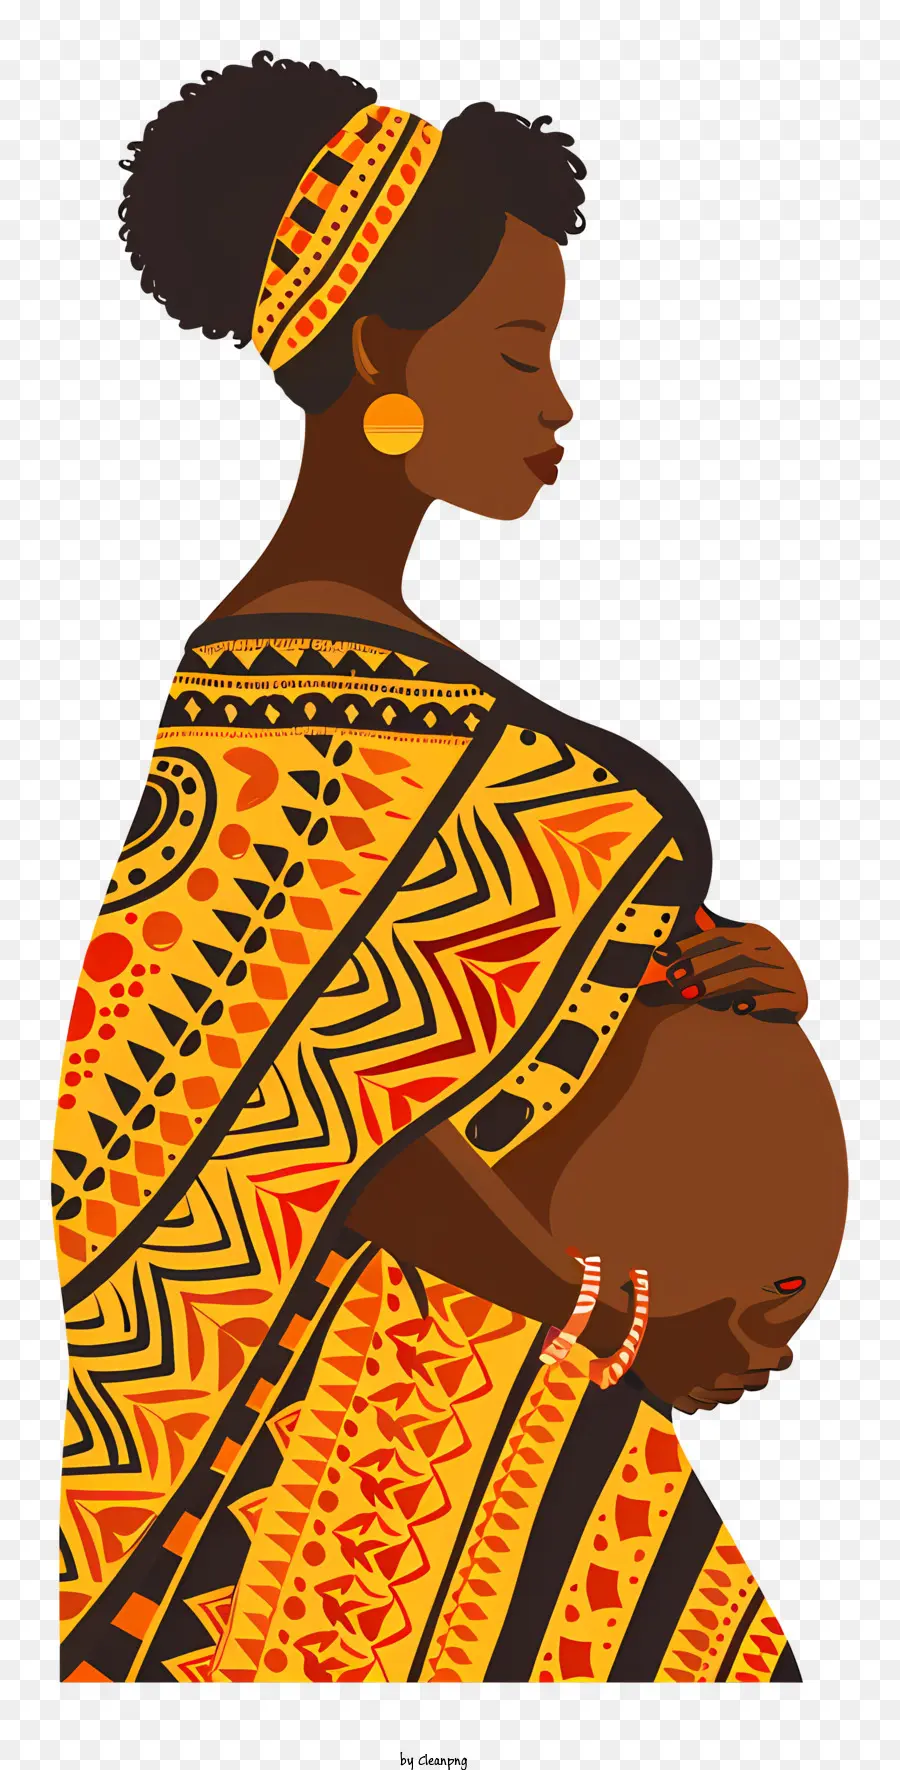 Schwangere afrikanische Frau Afrikanische Druckkleidung Schwangerschaft Mutterschaftsmode afrikanische Mode - Schwangere afrikanische Frau im gedruckten Kleid